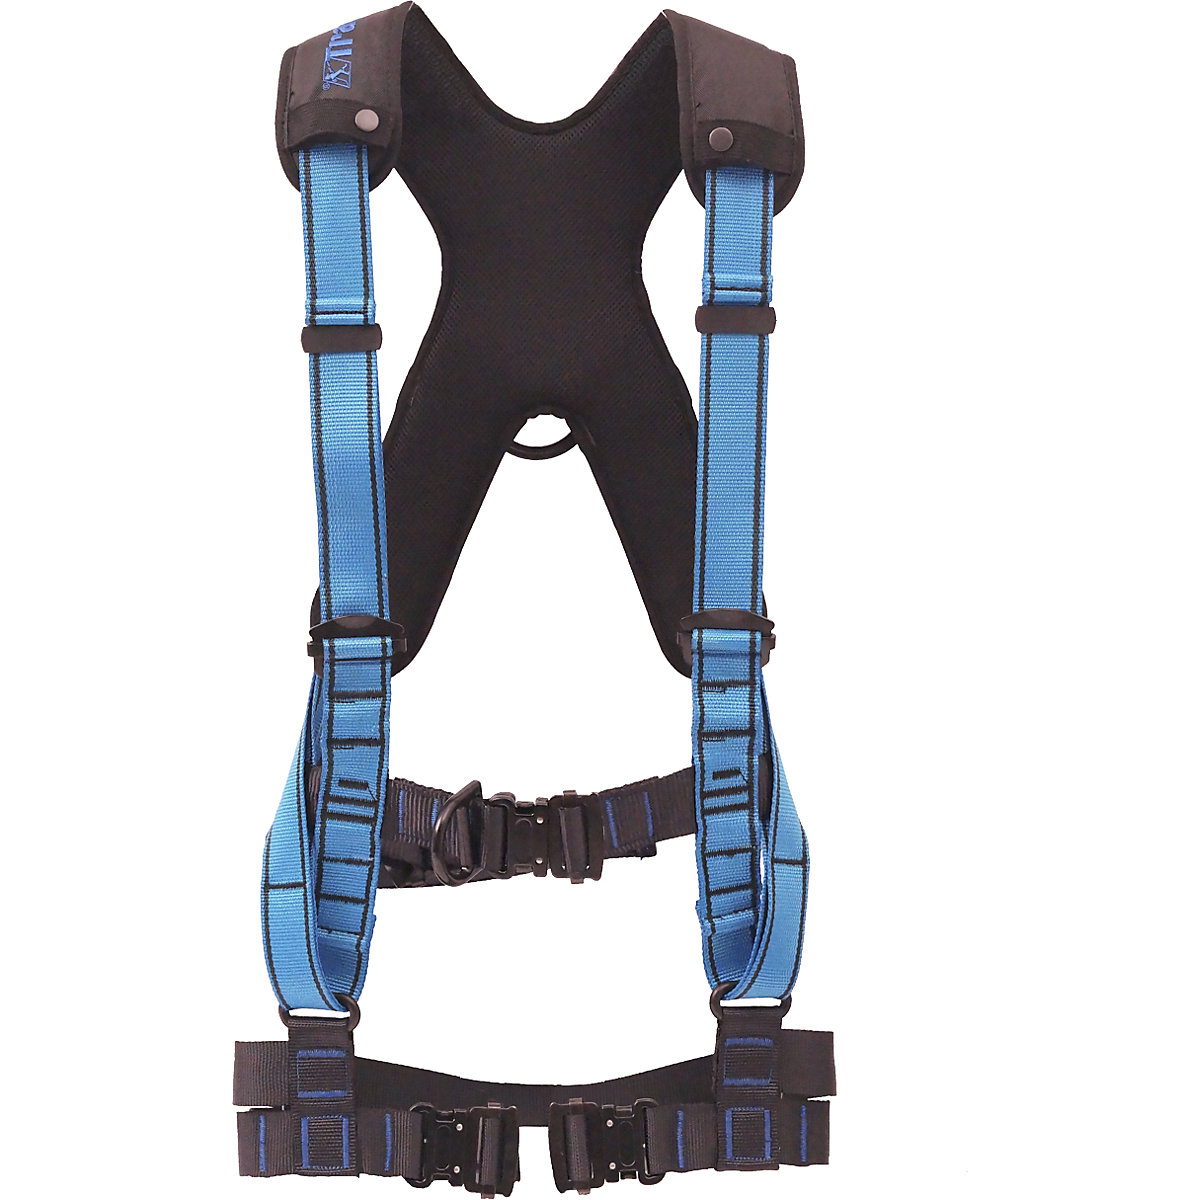 HT 55 S A XP safety harness